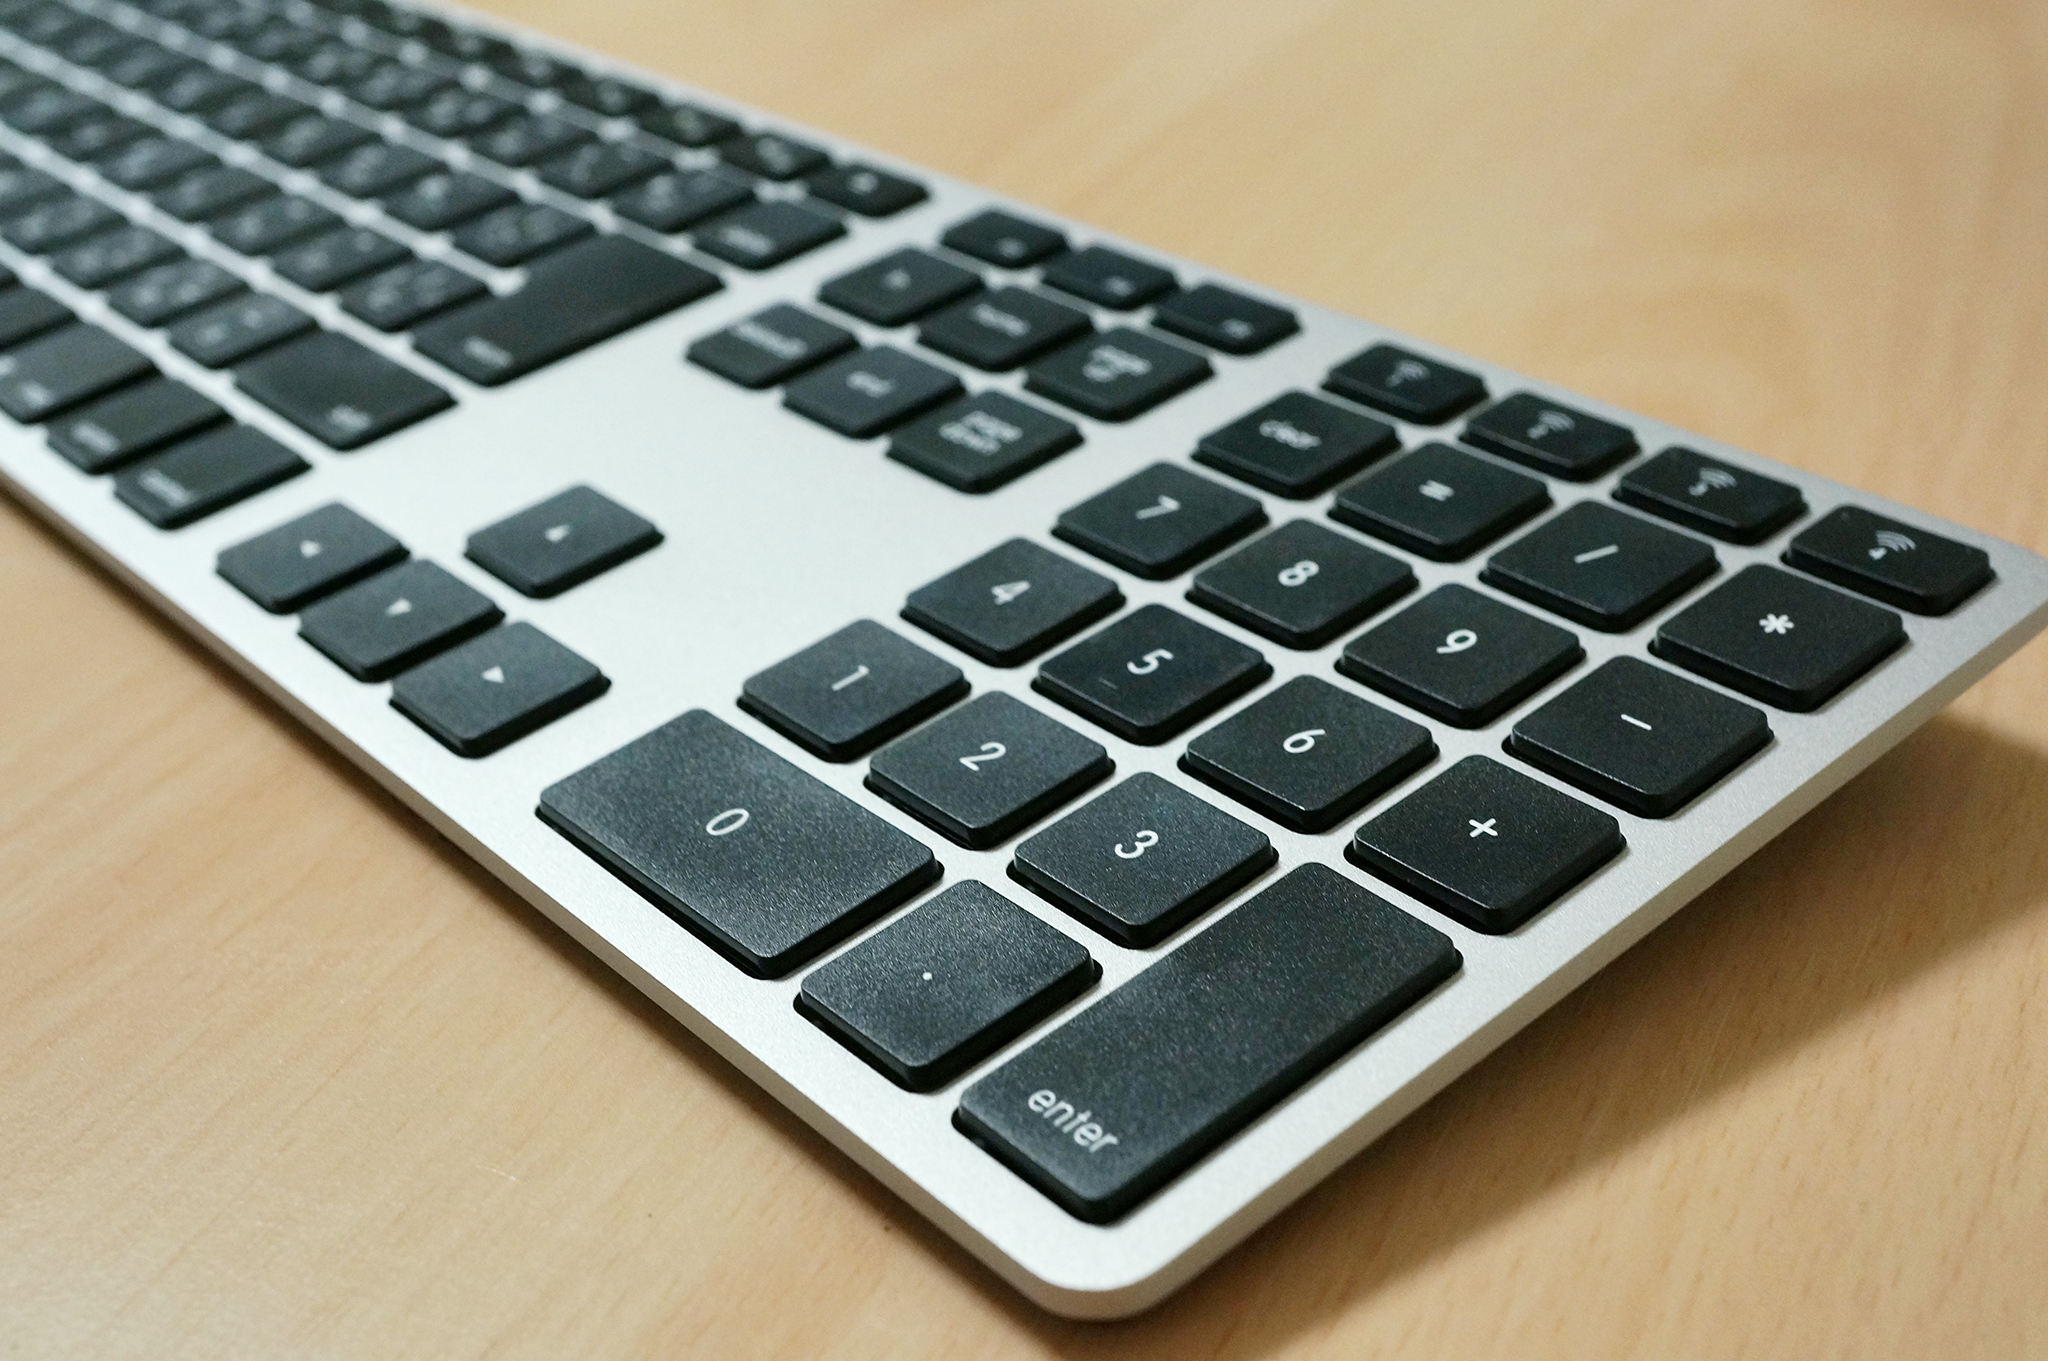 Matias Wireless Aluminum Keyboard レビュー まるでmacbook Mac用